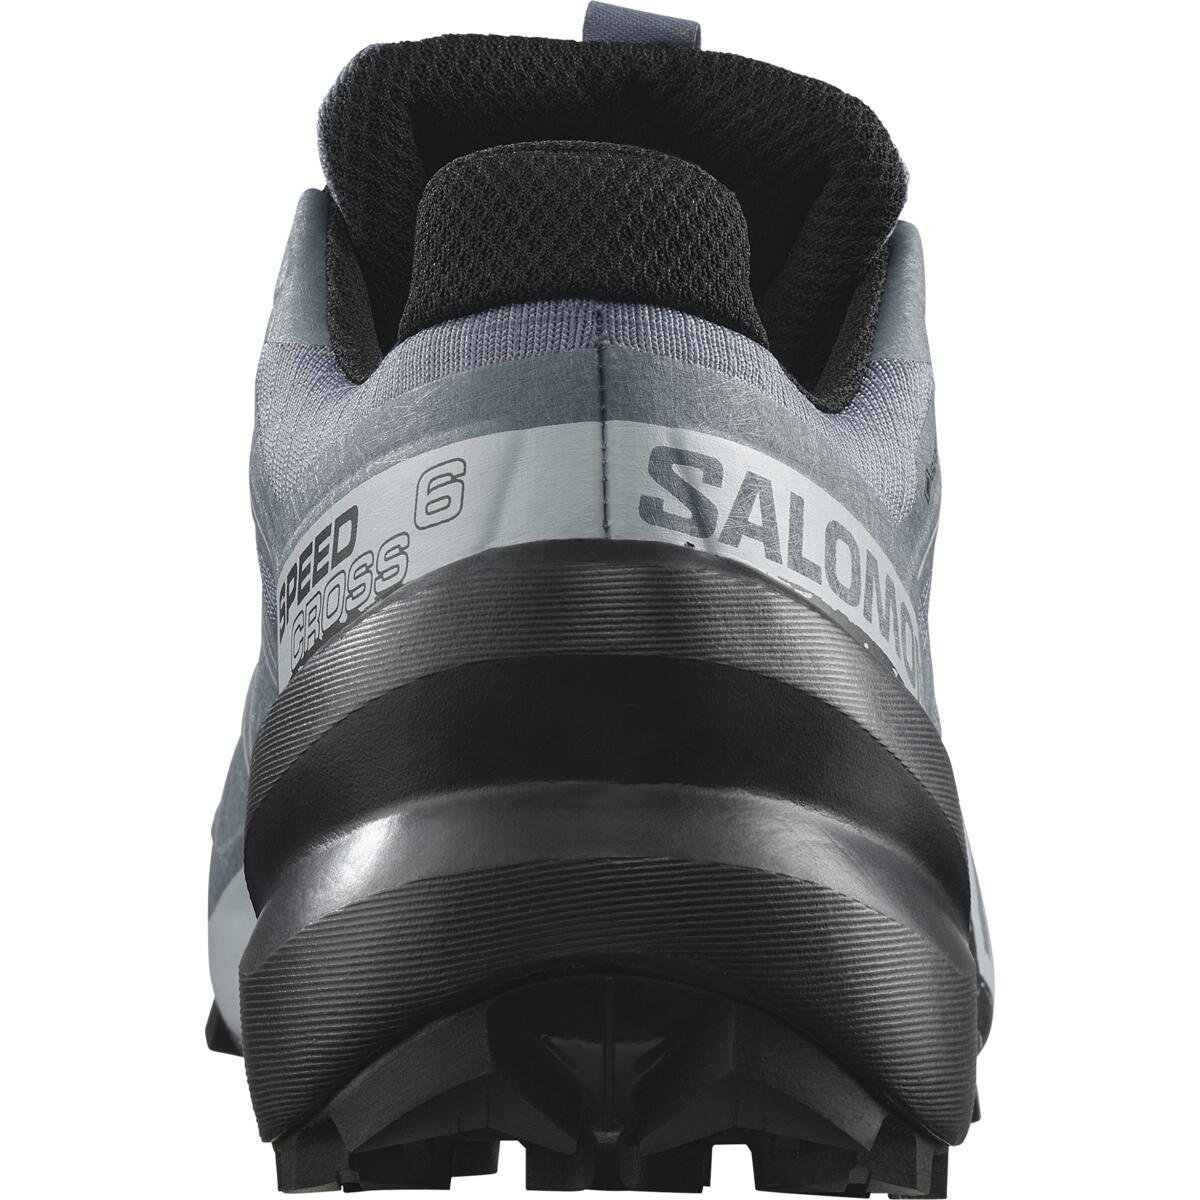 Obuv Salomon Speedcross 6 GTX W - sivá/čierna